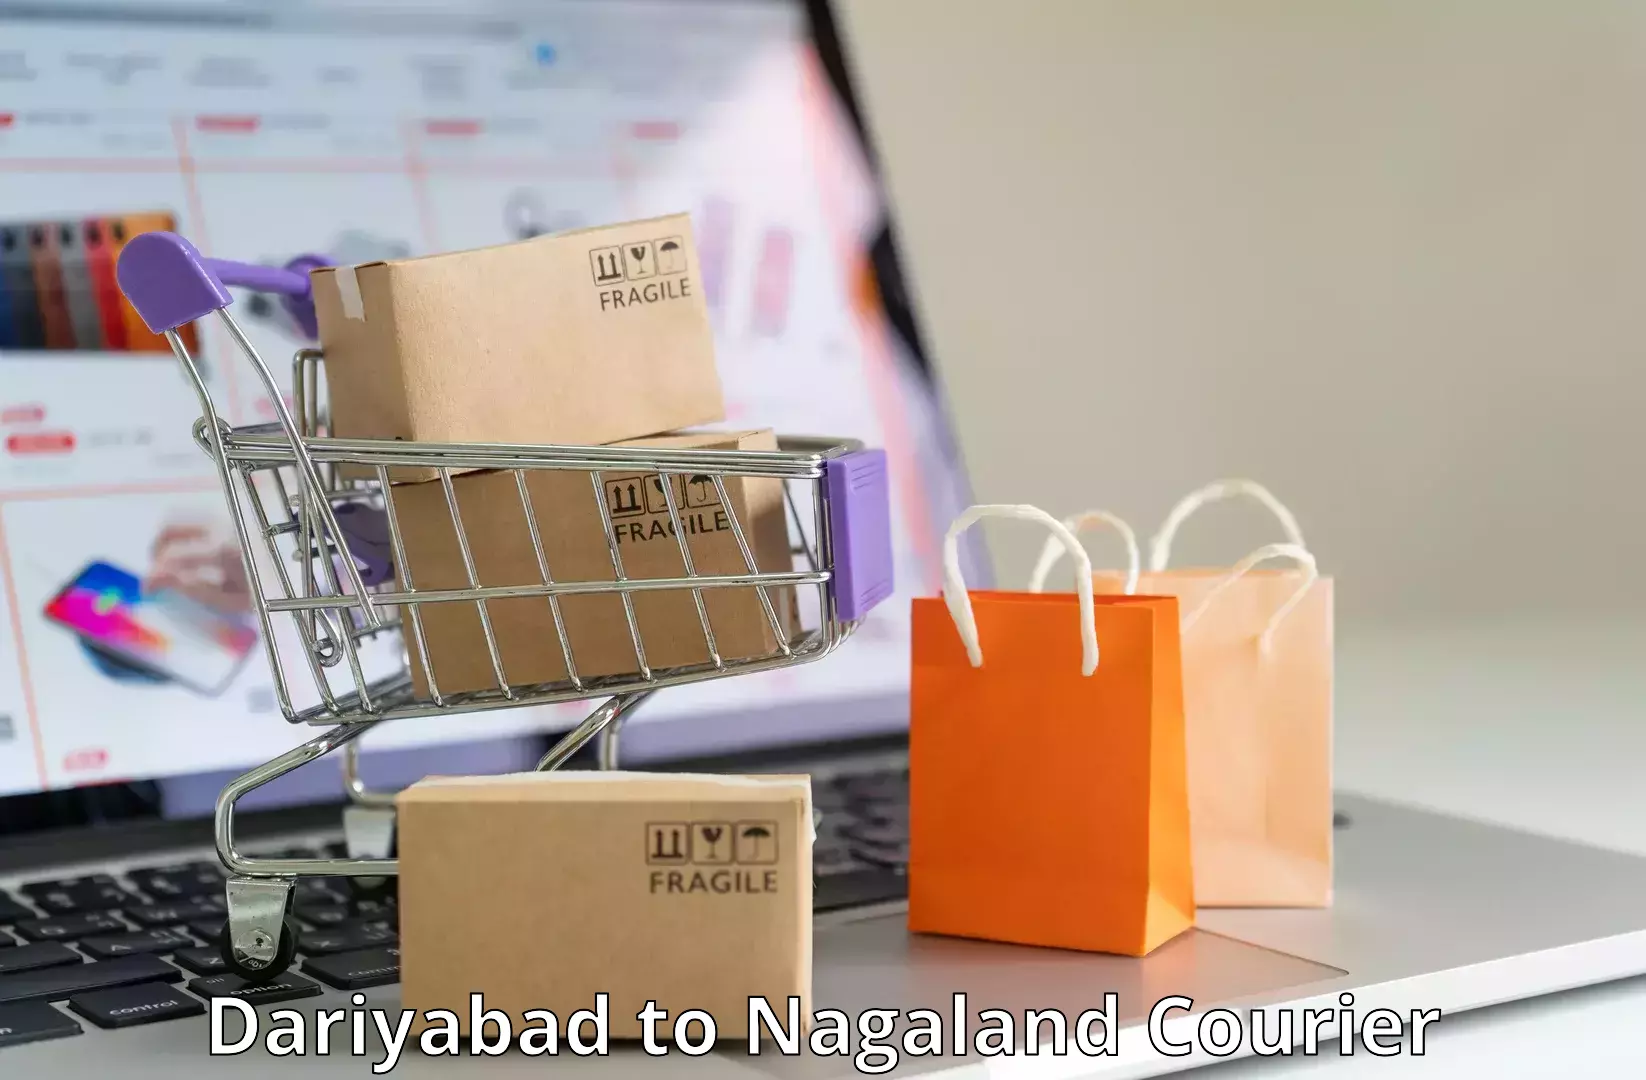 Cash on delivery service Dariyabad to Kohima